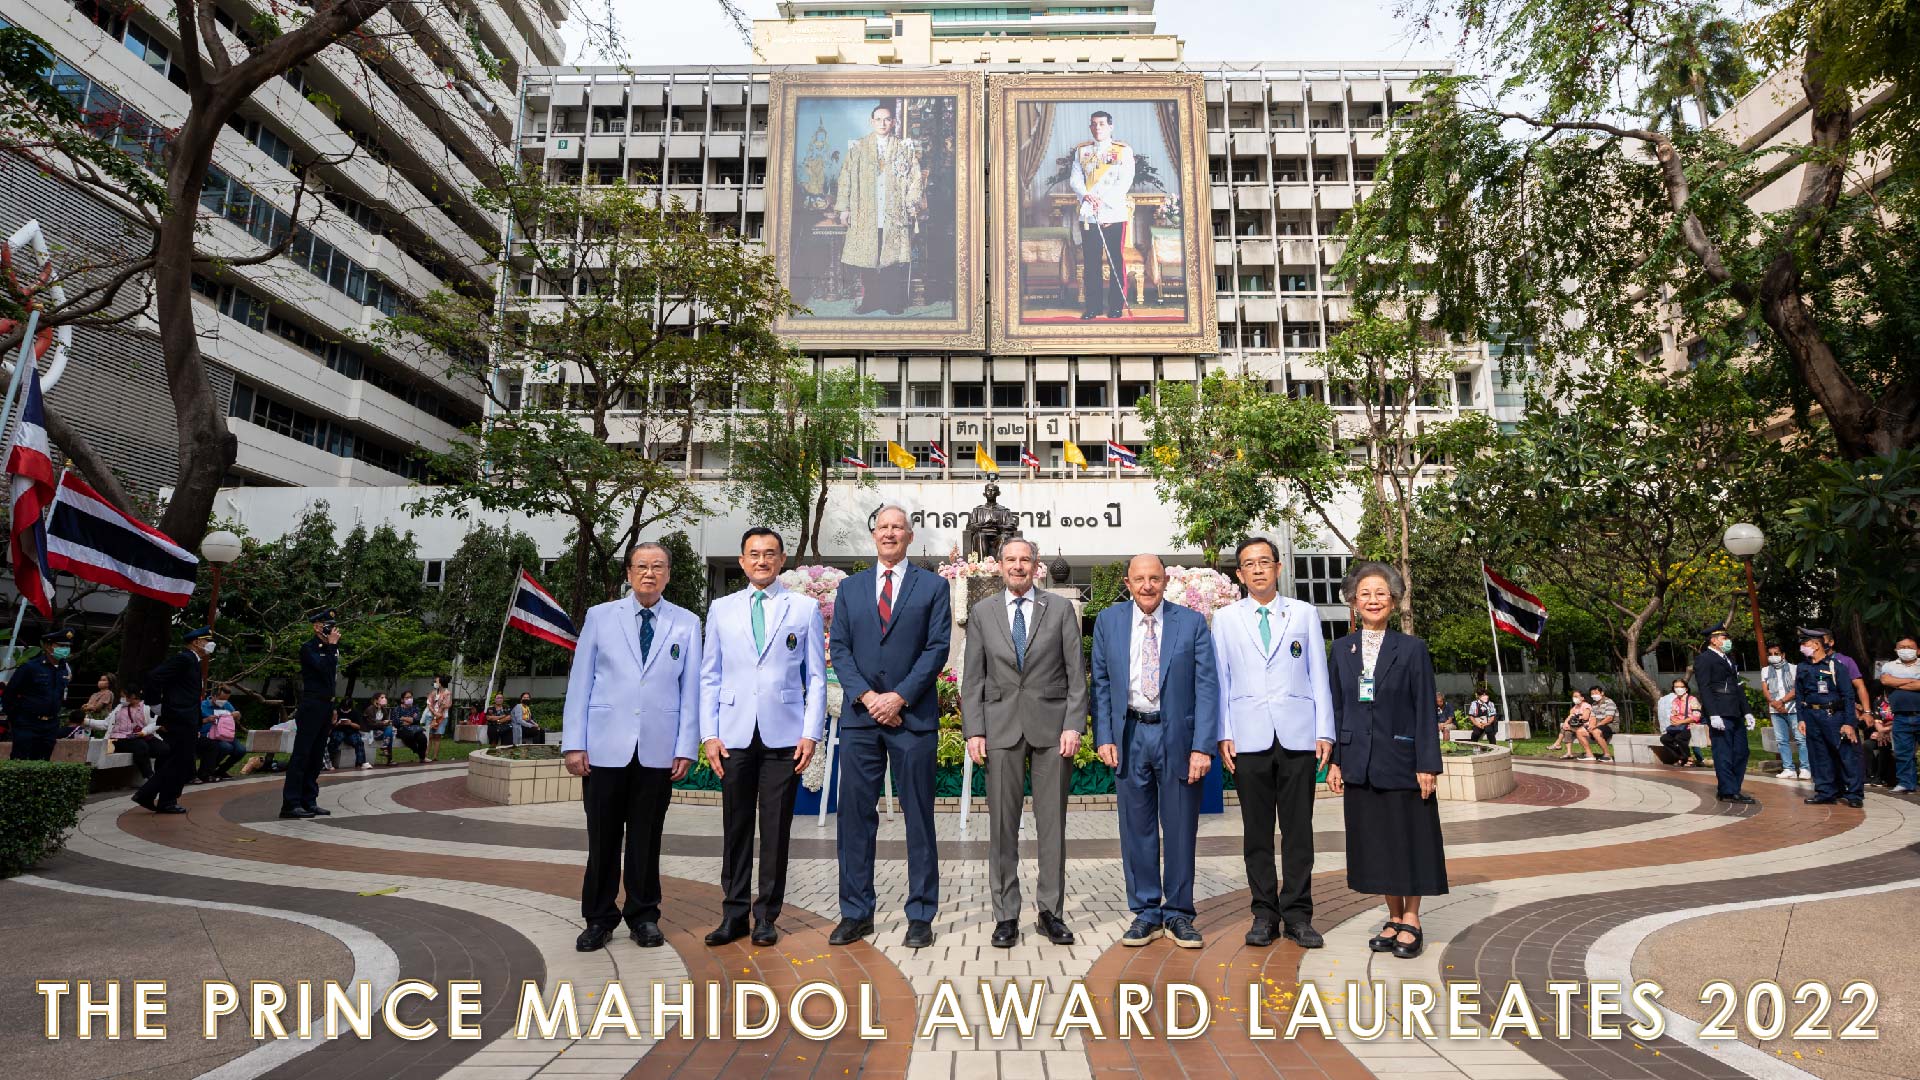 The Prince Mahidol Award Laureates 2022